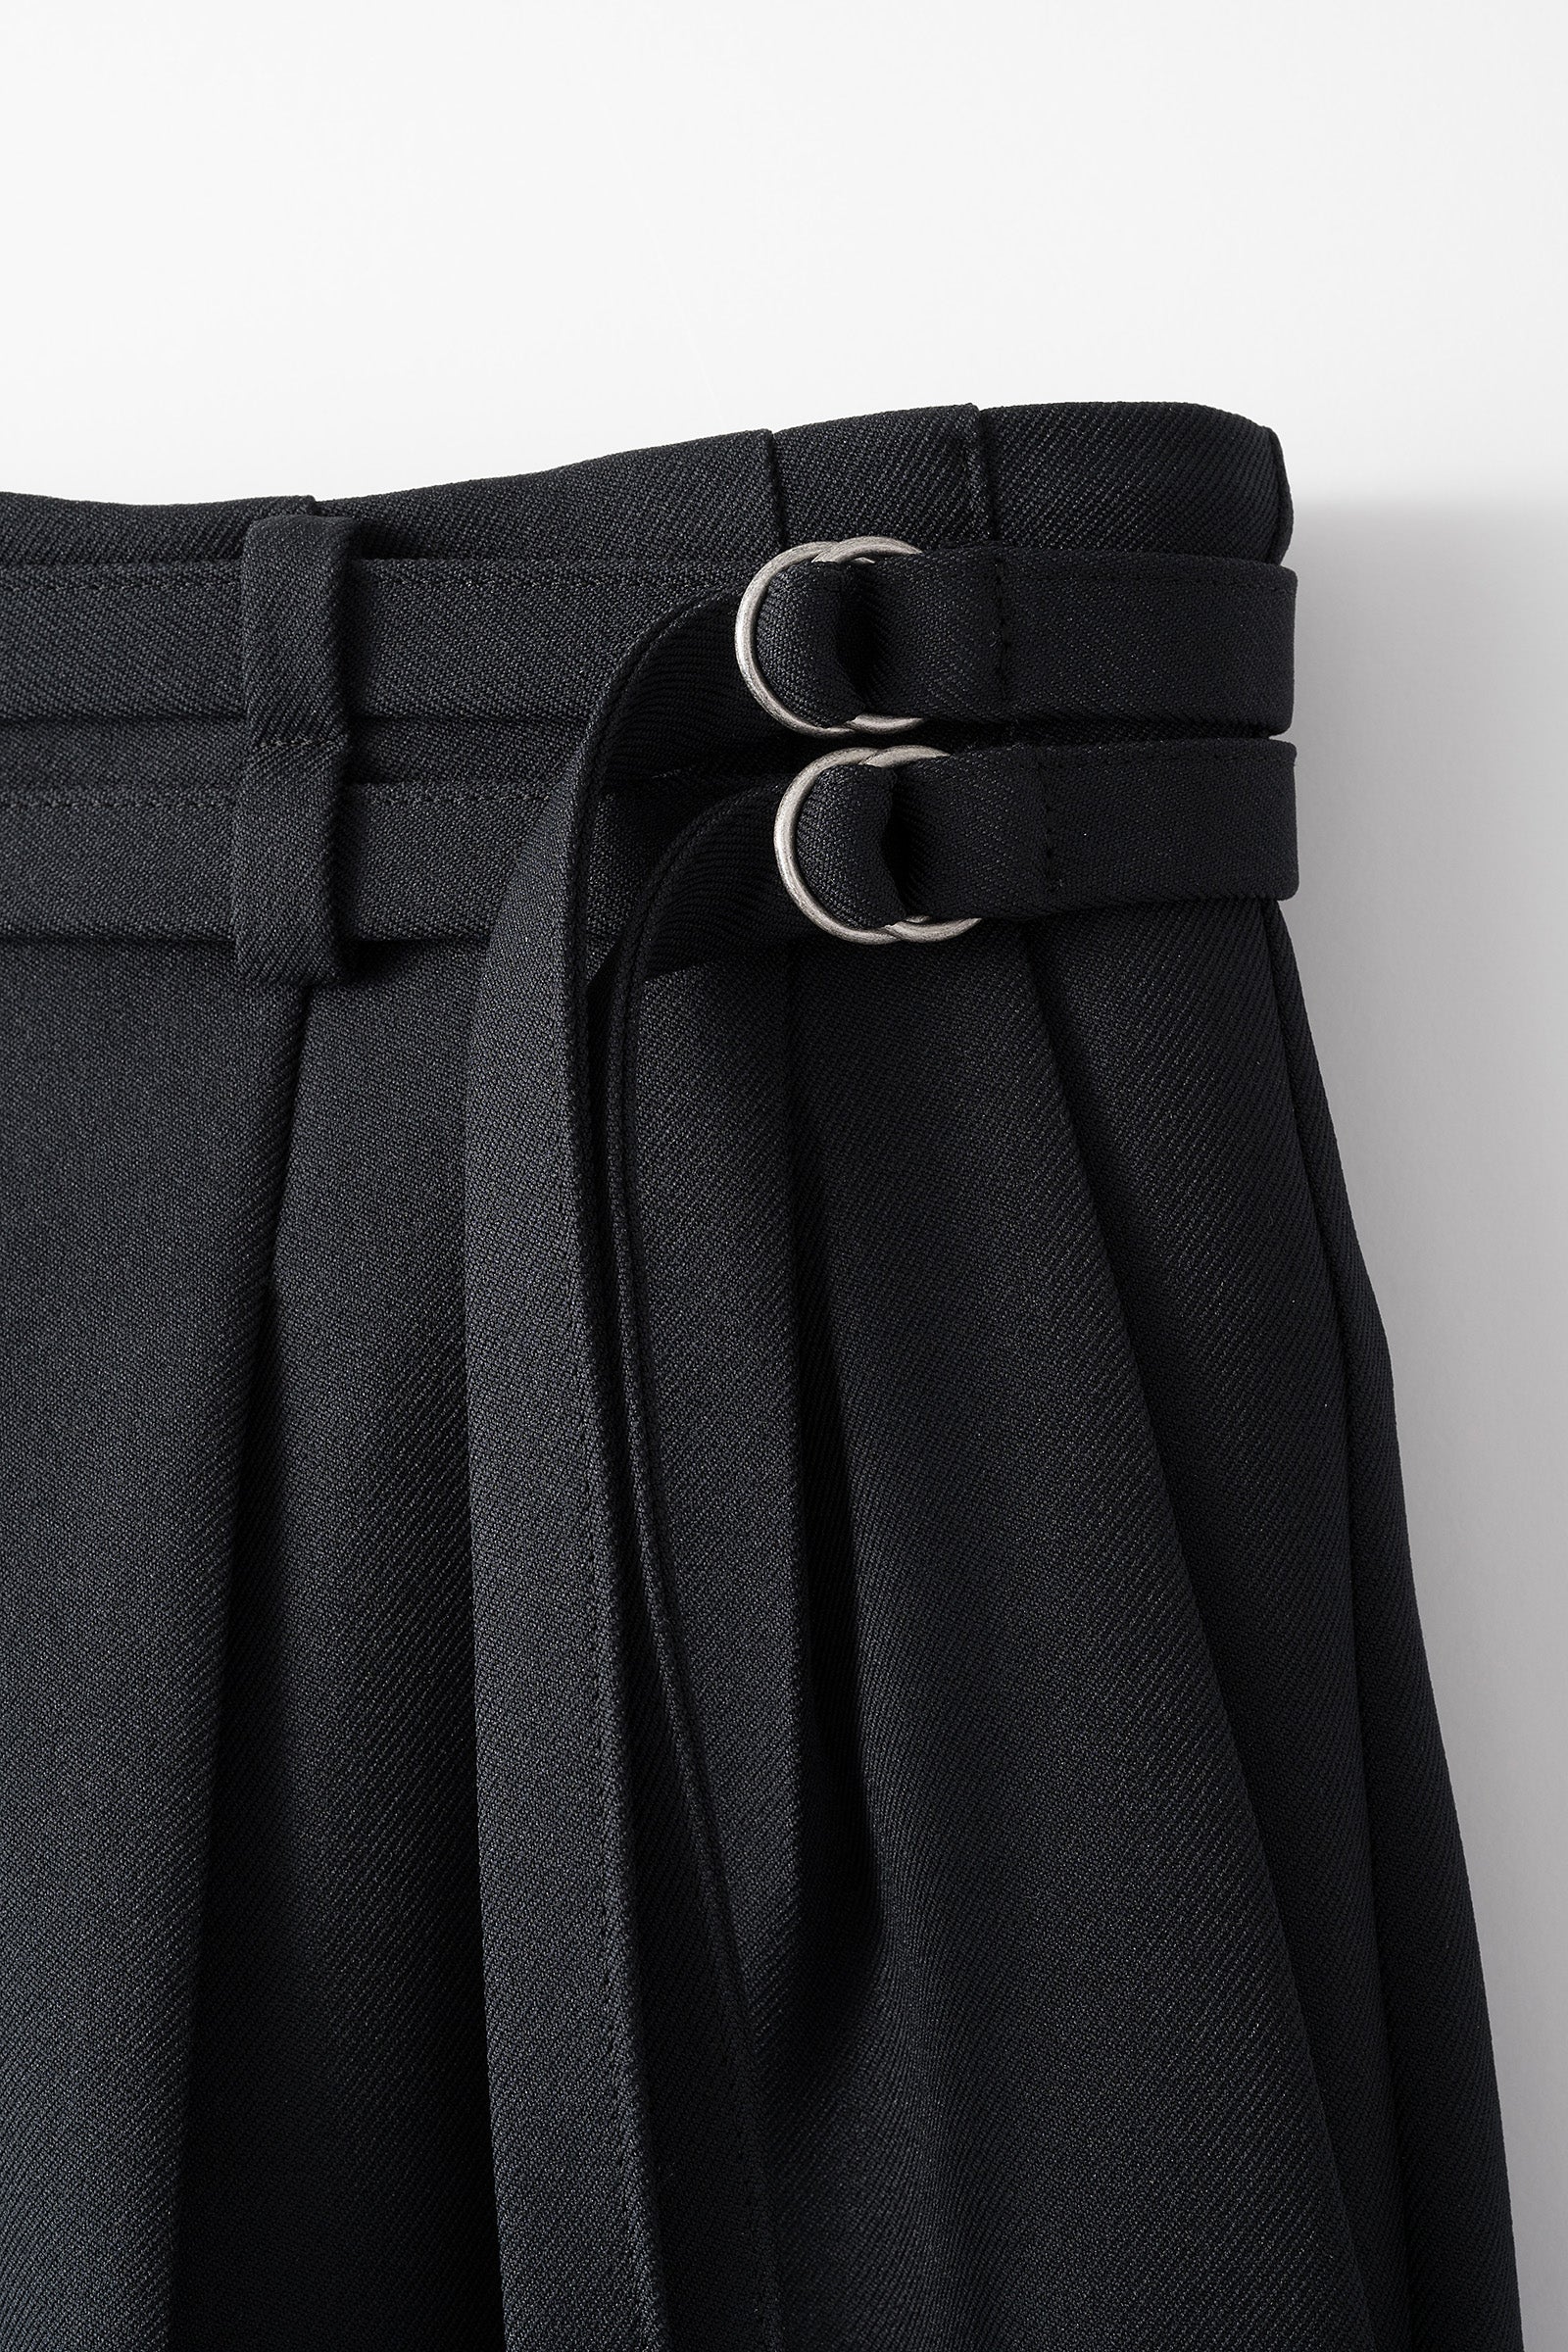 Flow string trousers (Black)